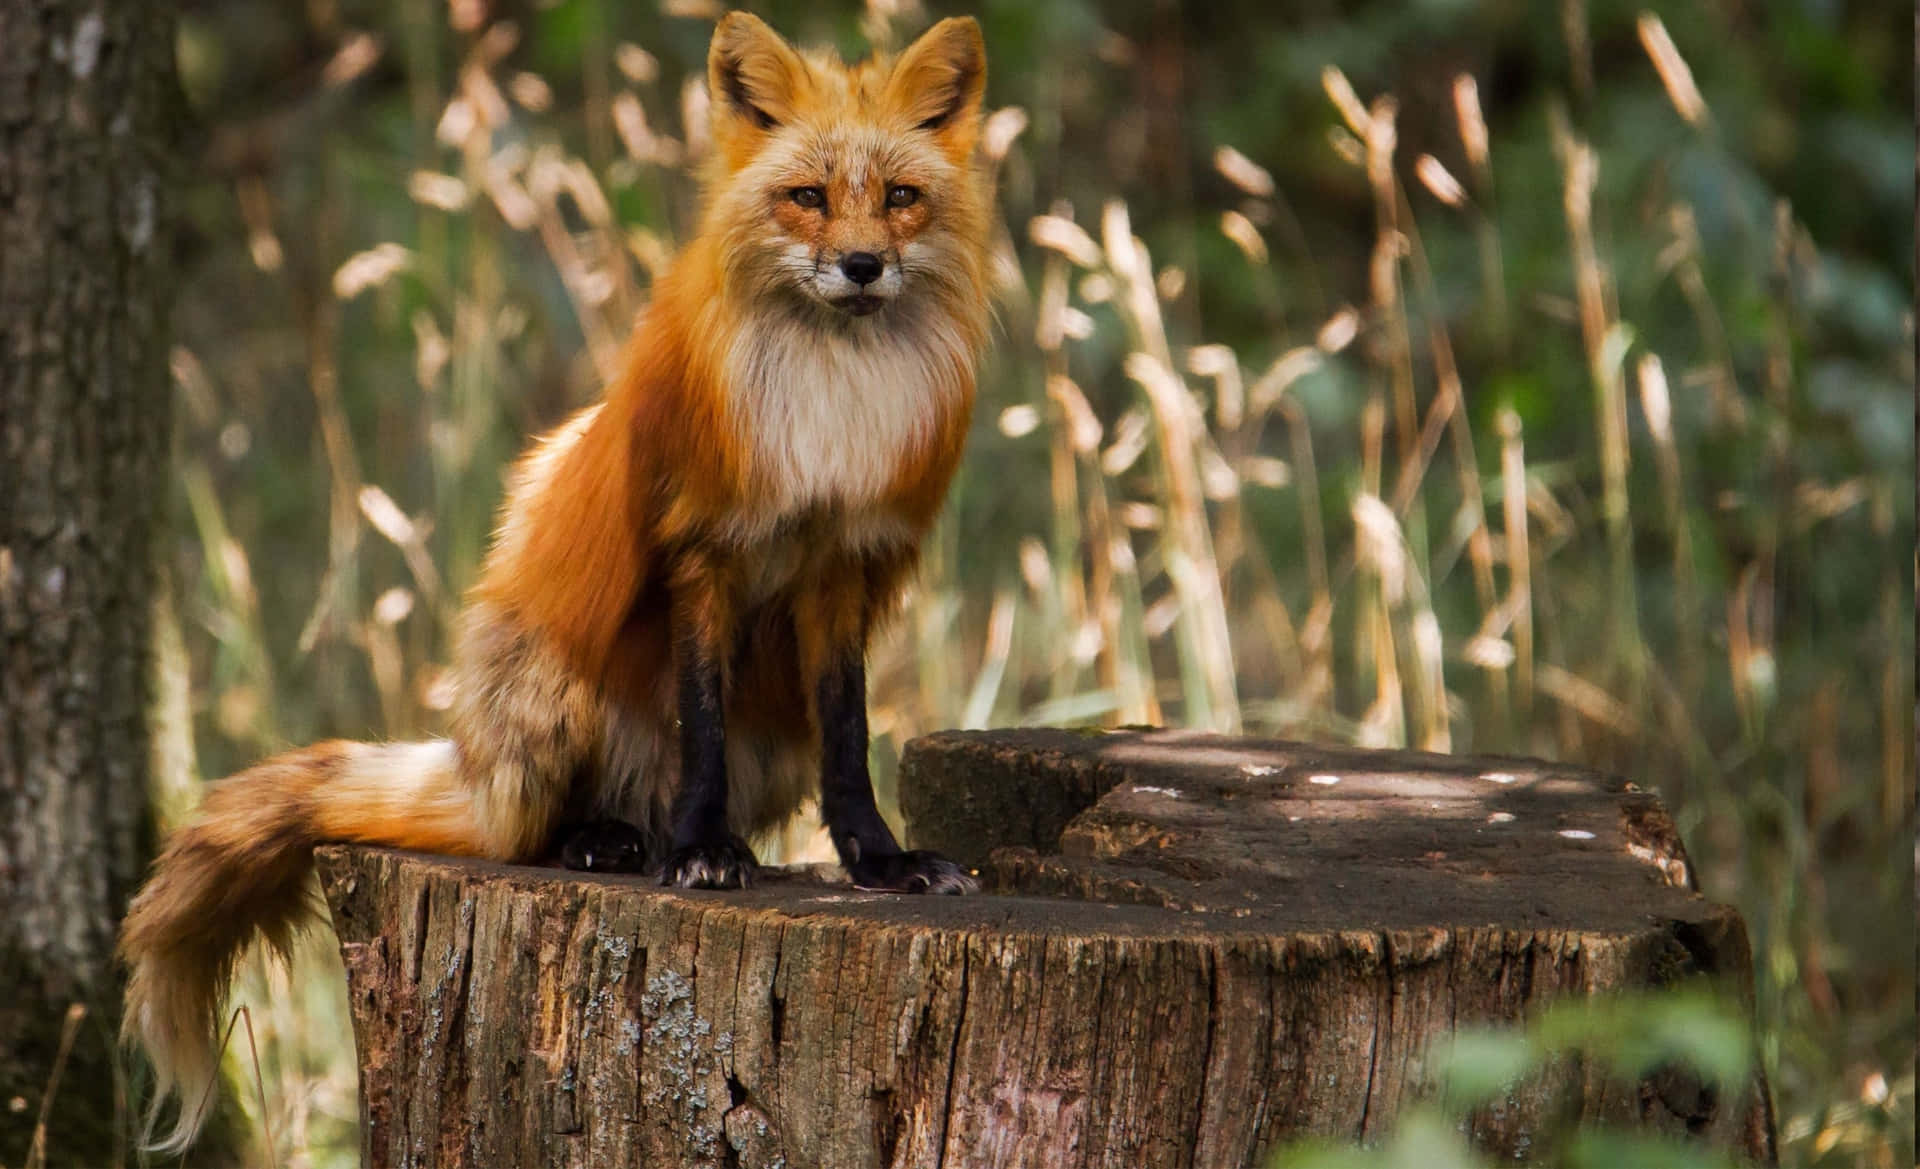 A fox in a beautiful natural environment